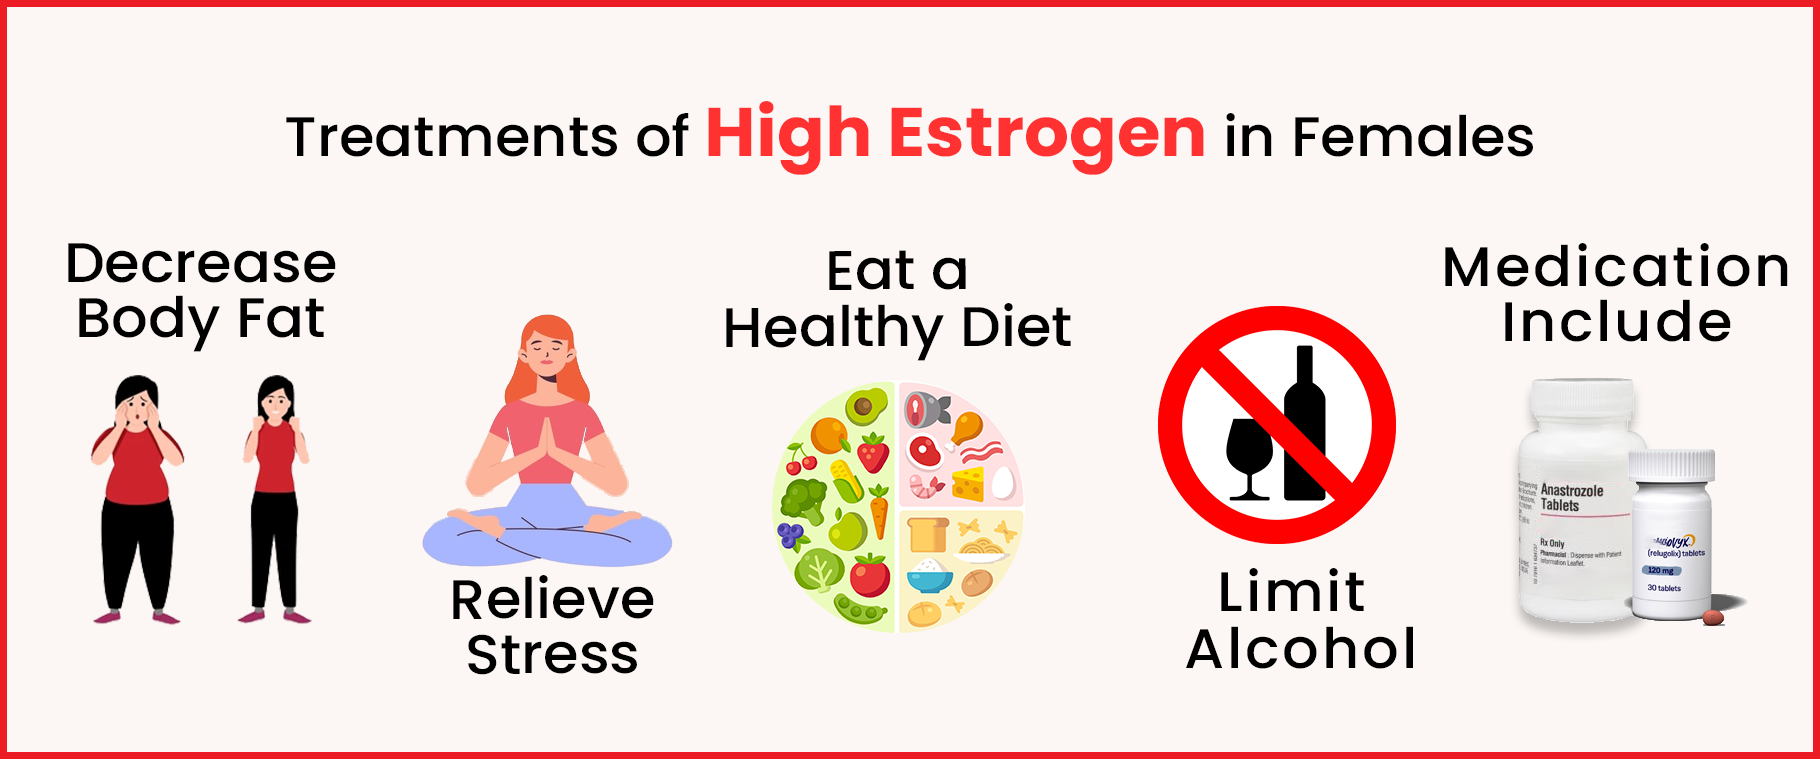 Treatment of high estrogen in females